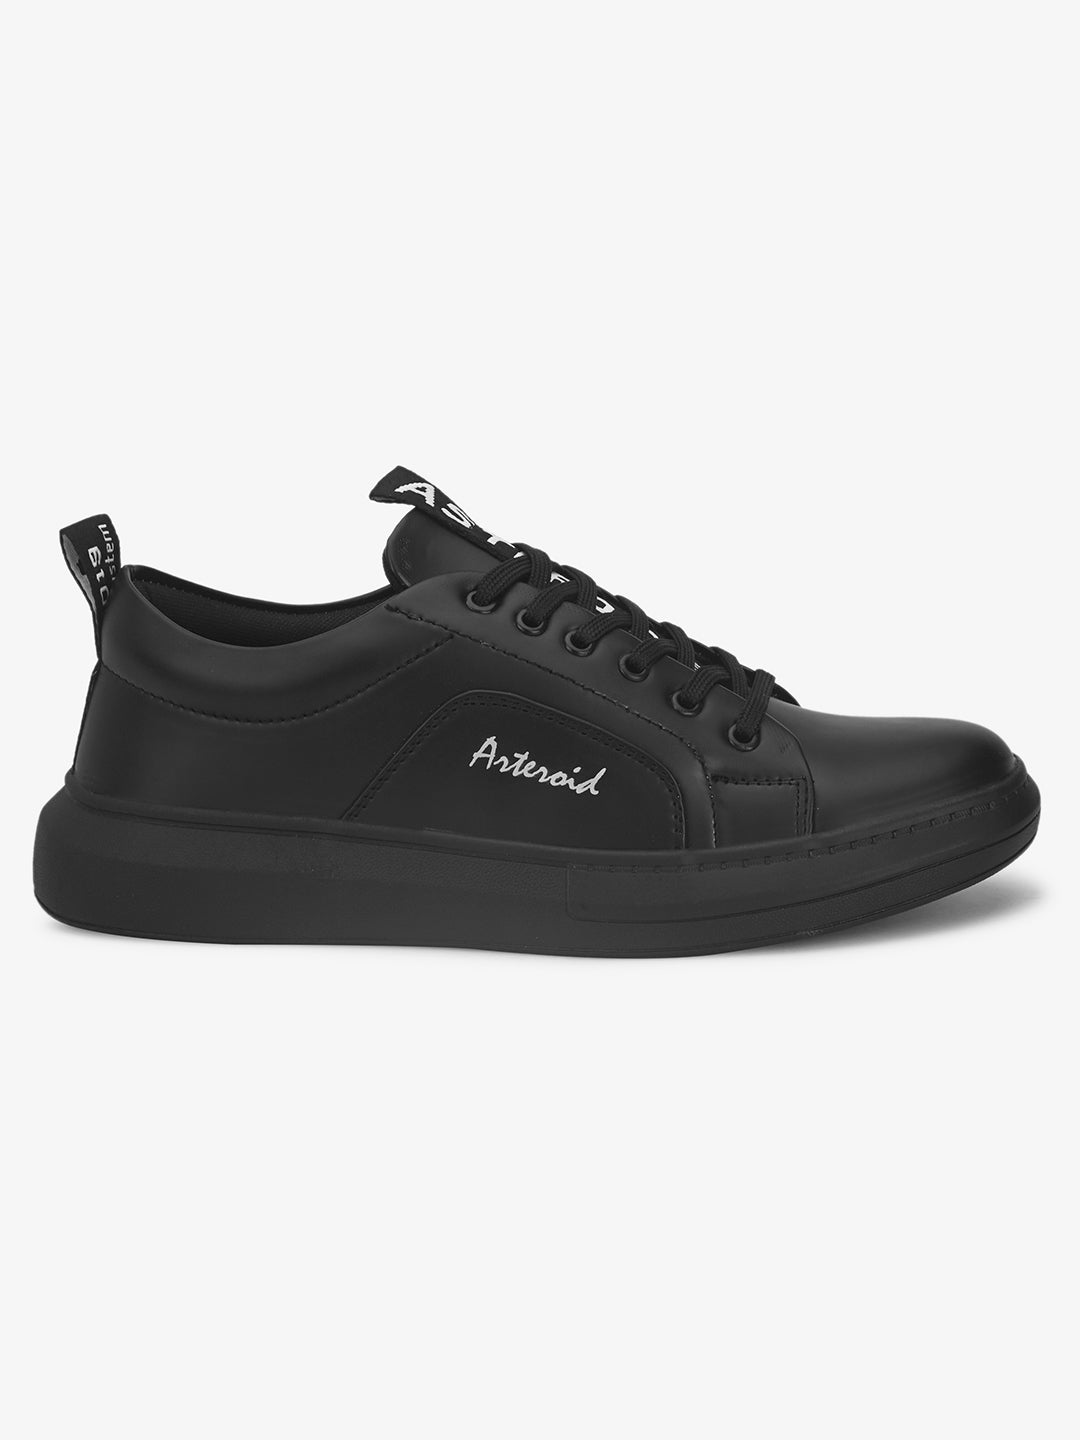 ASTEROID Men's Premium Sneakers.